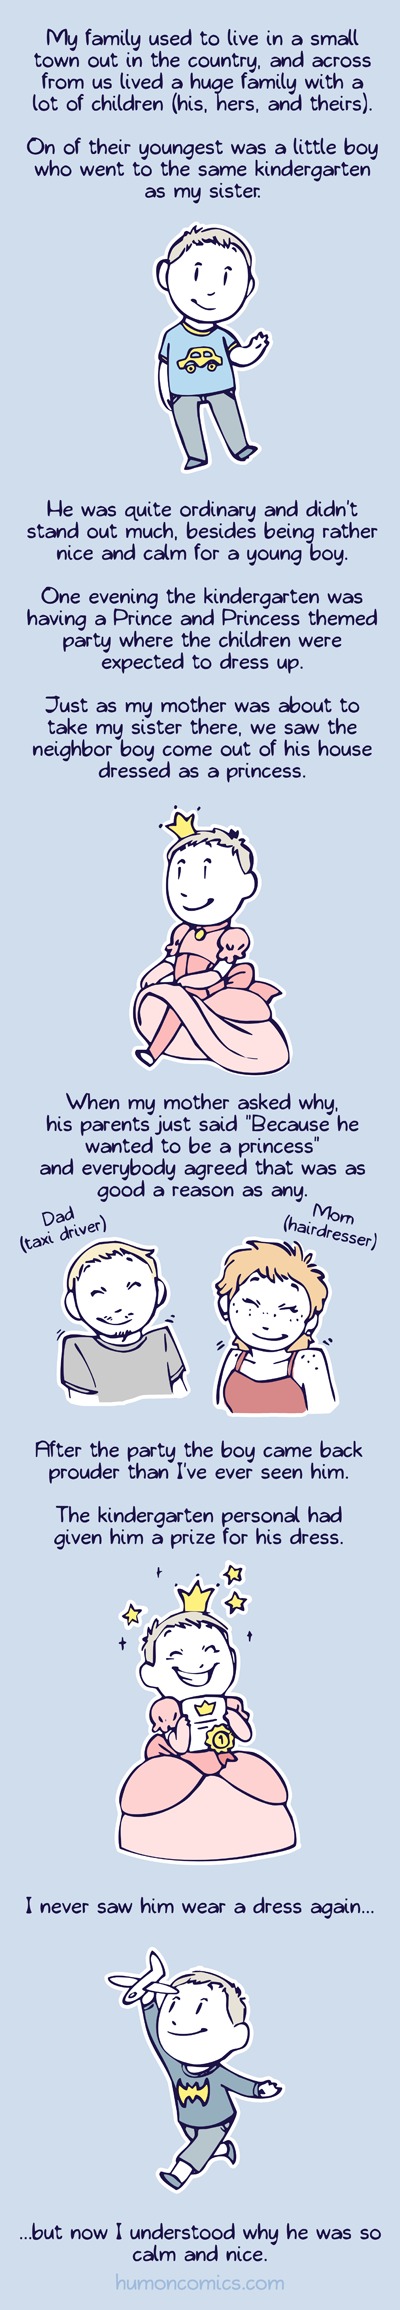 Little Princess HumonComics.com